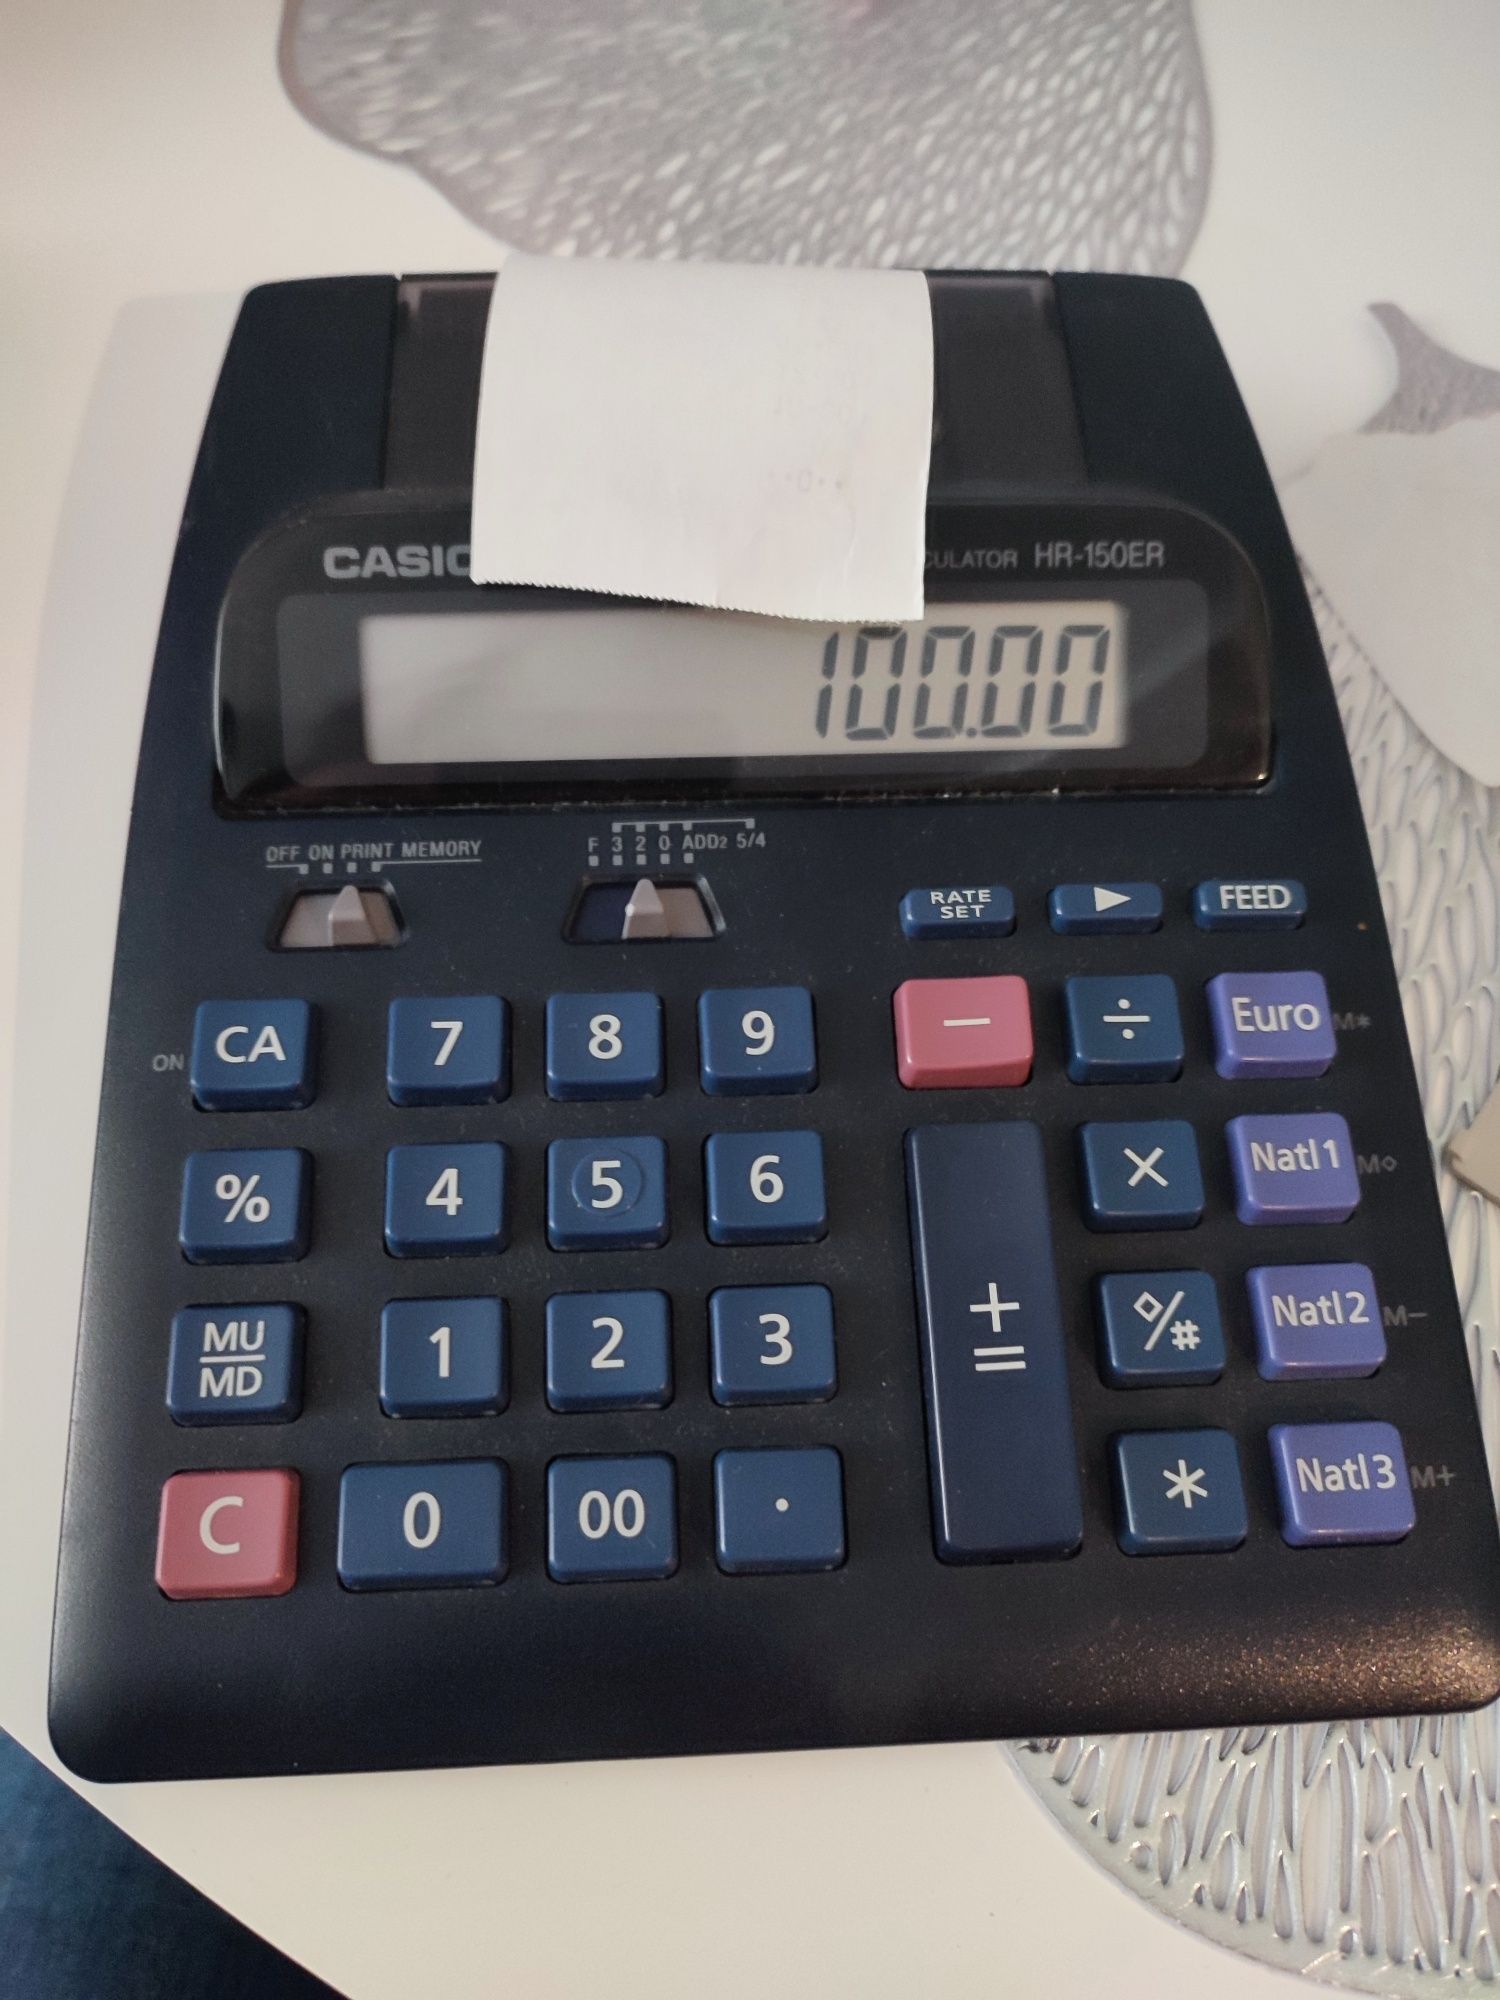 kalkulator elektroniczny drukujacy CASIO PRINTING CALCULATOR HR-150ER